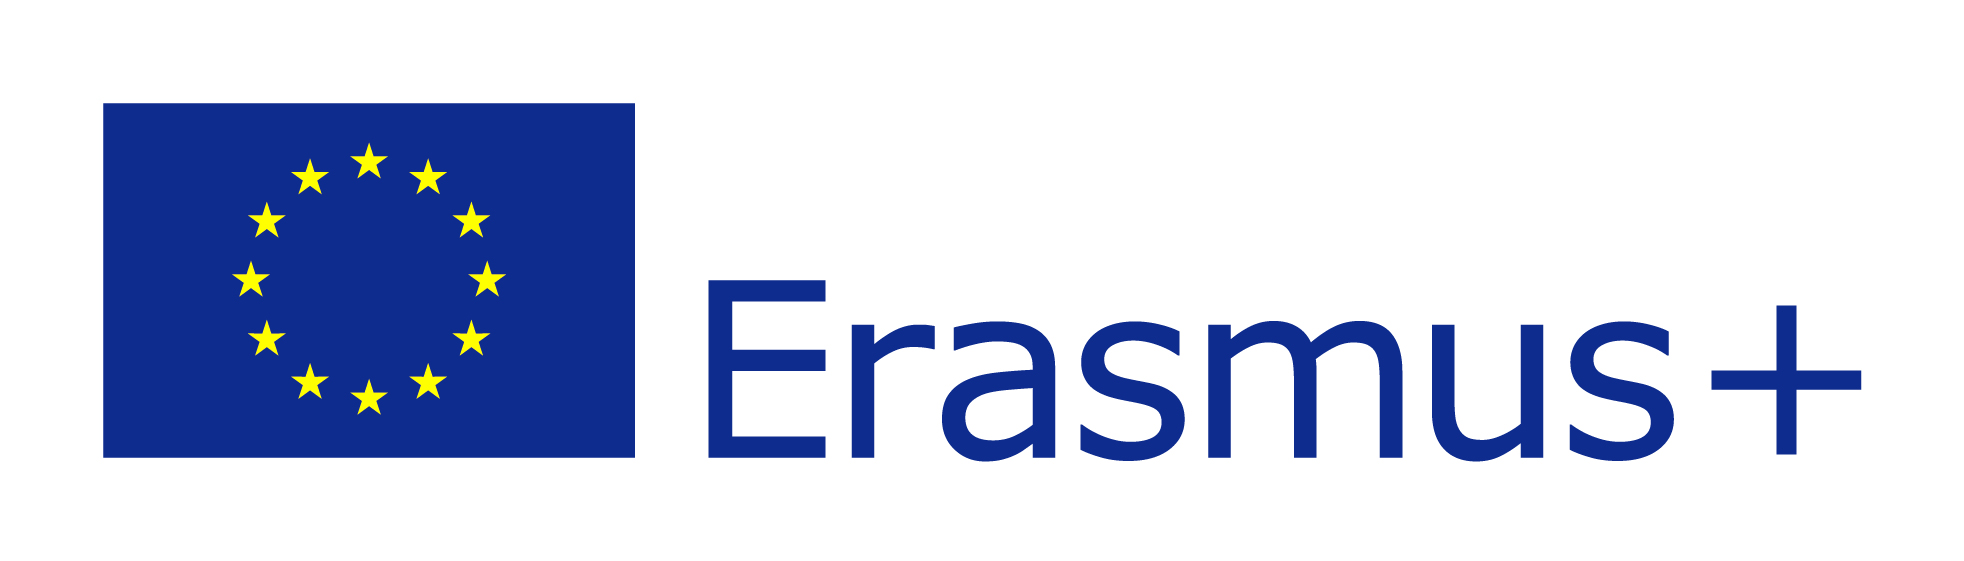 logo Erasmus+.jpg